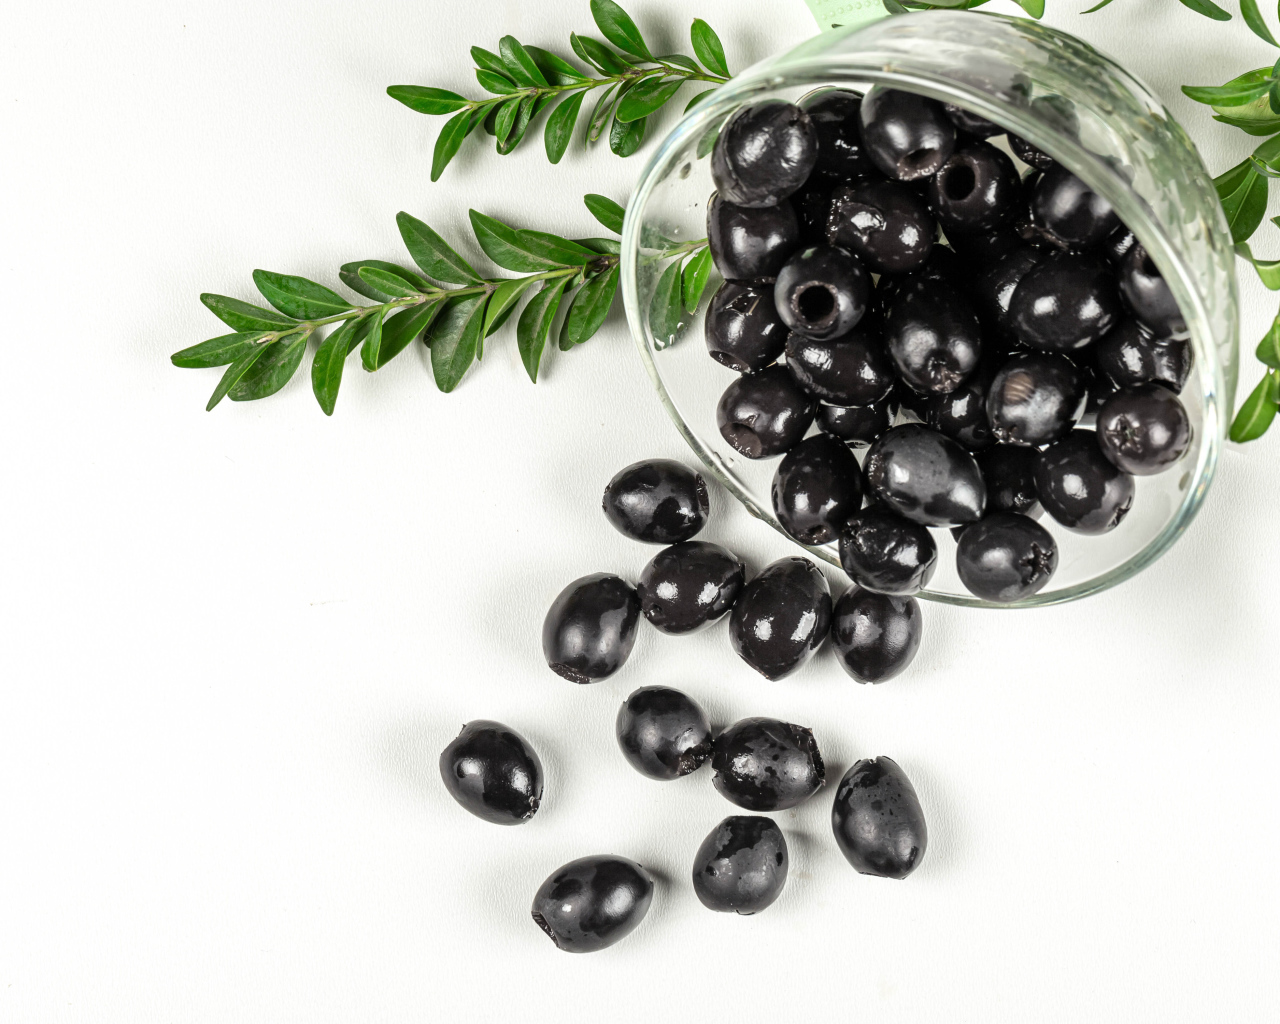 Black olives with rosemary on white background